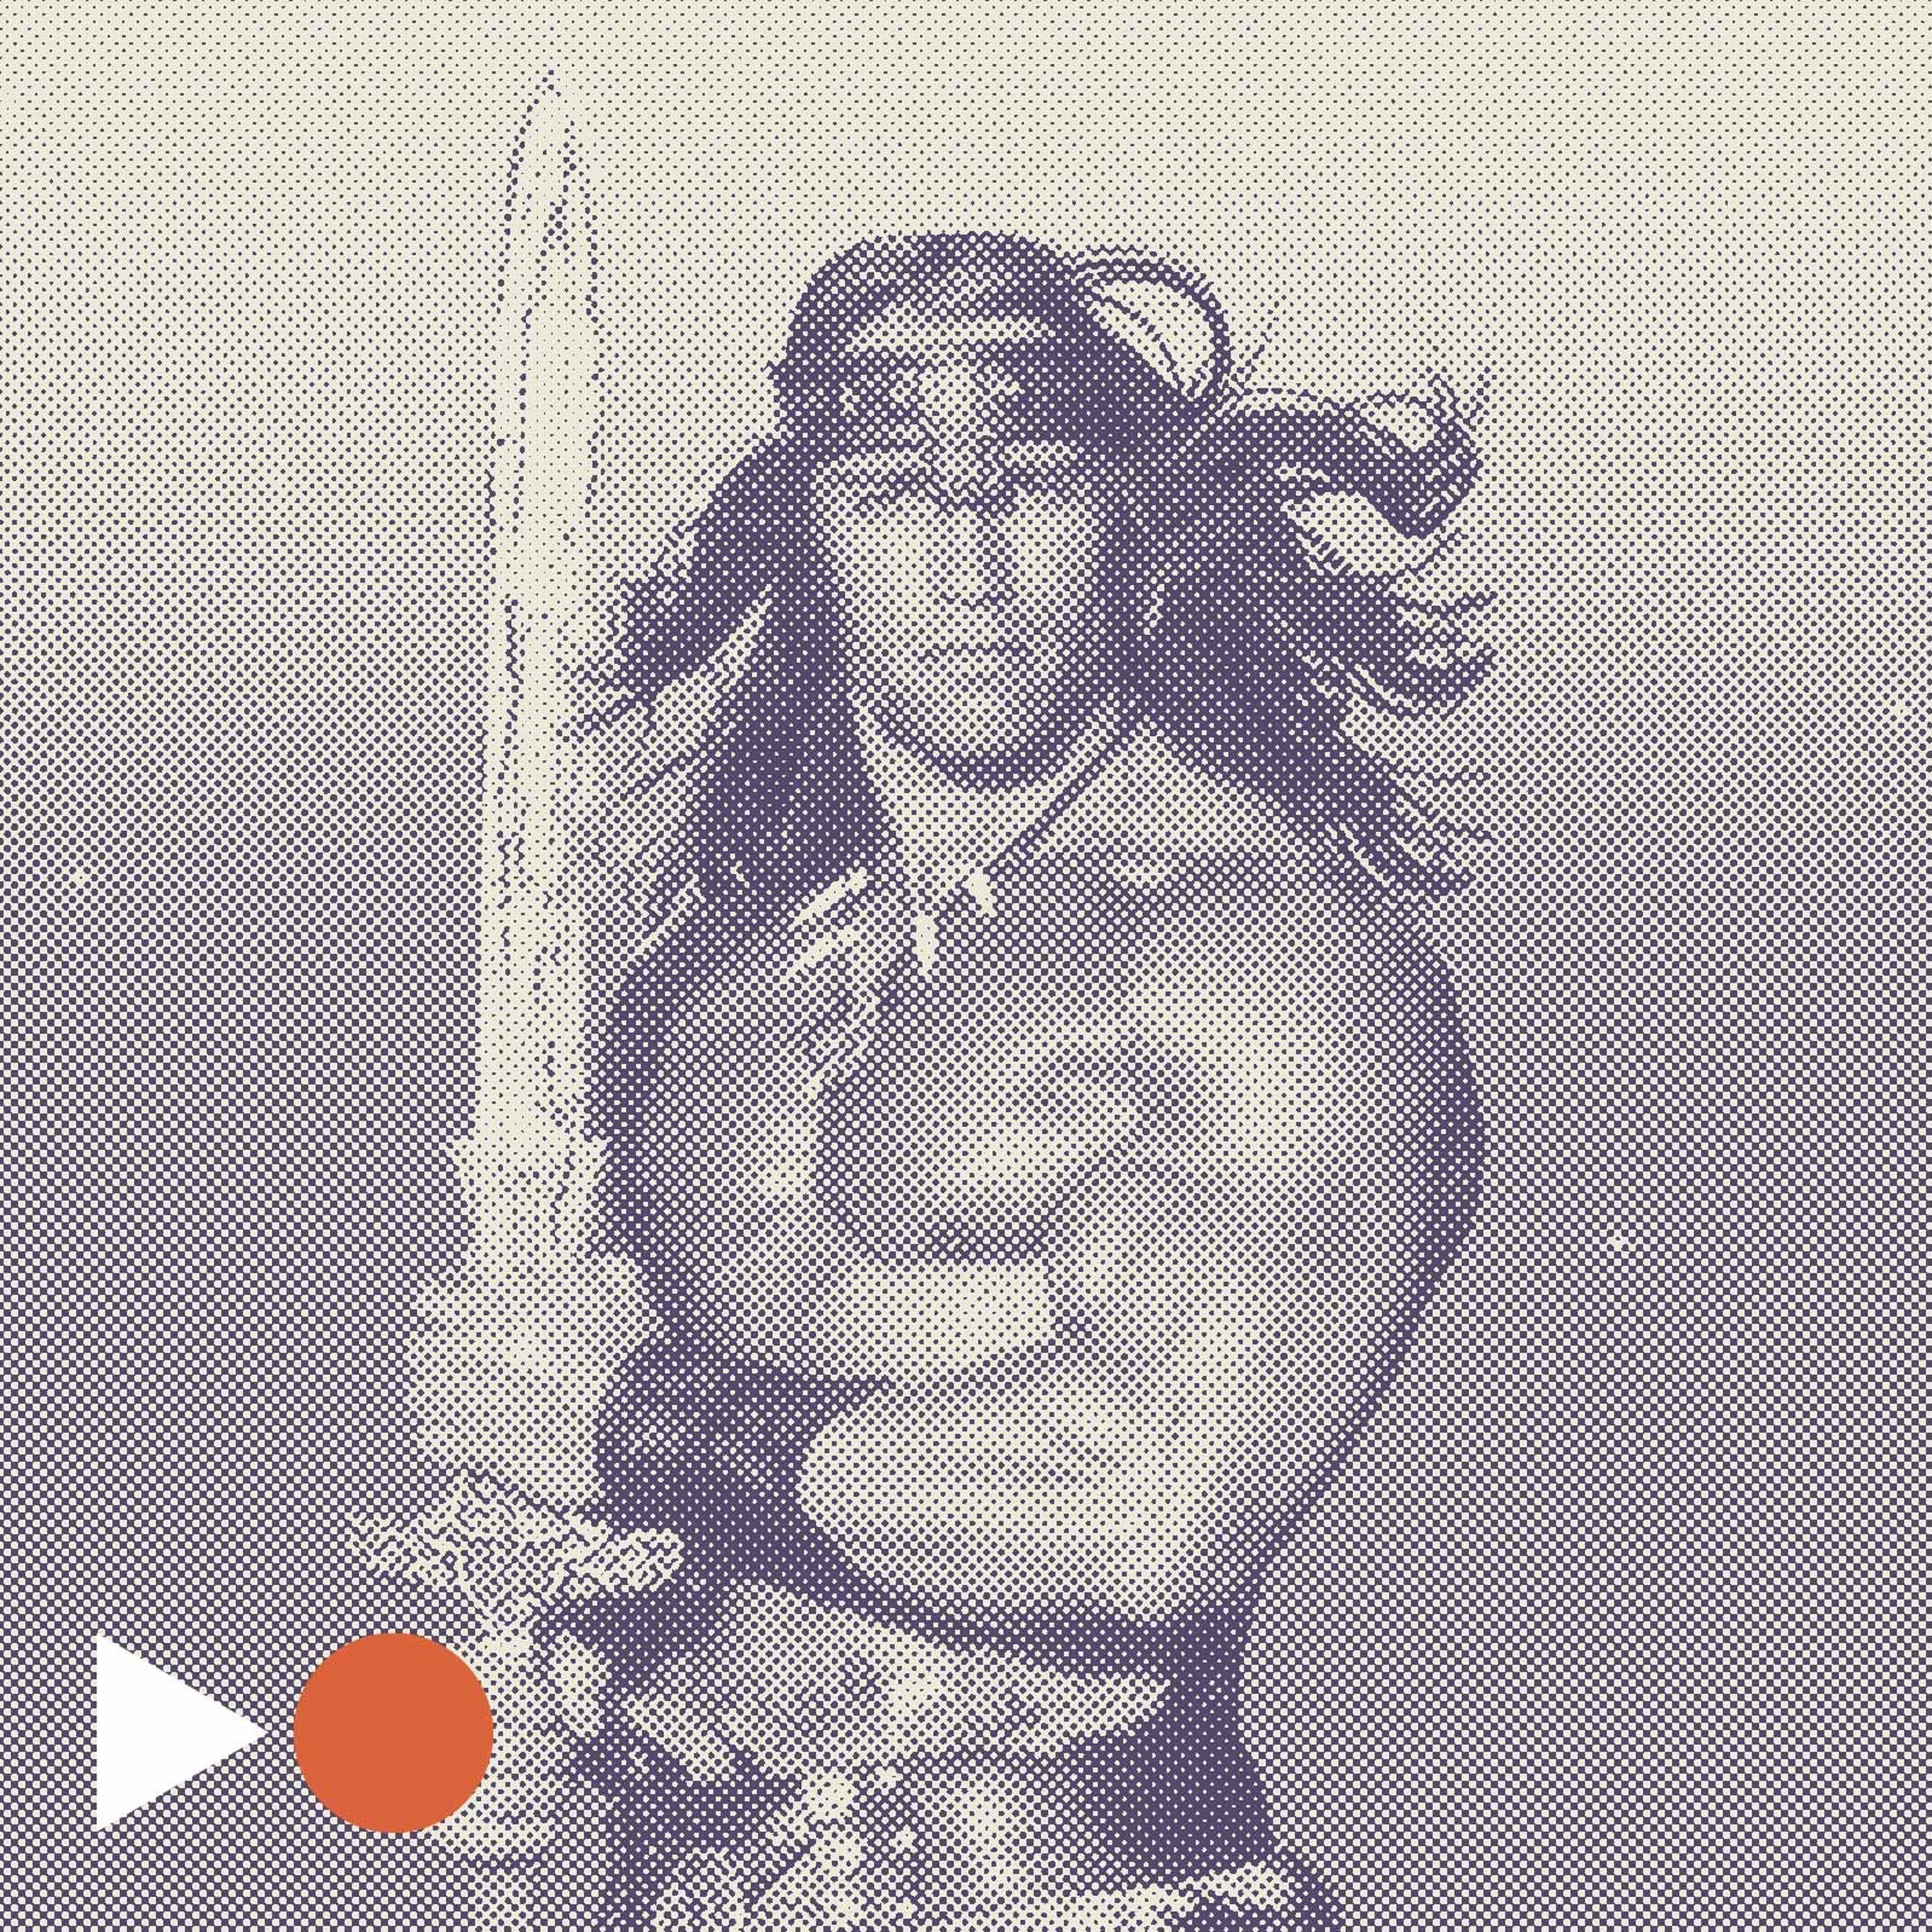 Avsnitt 86: Conan The Barbarian